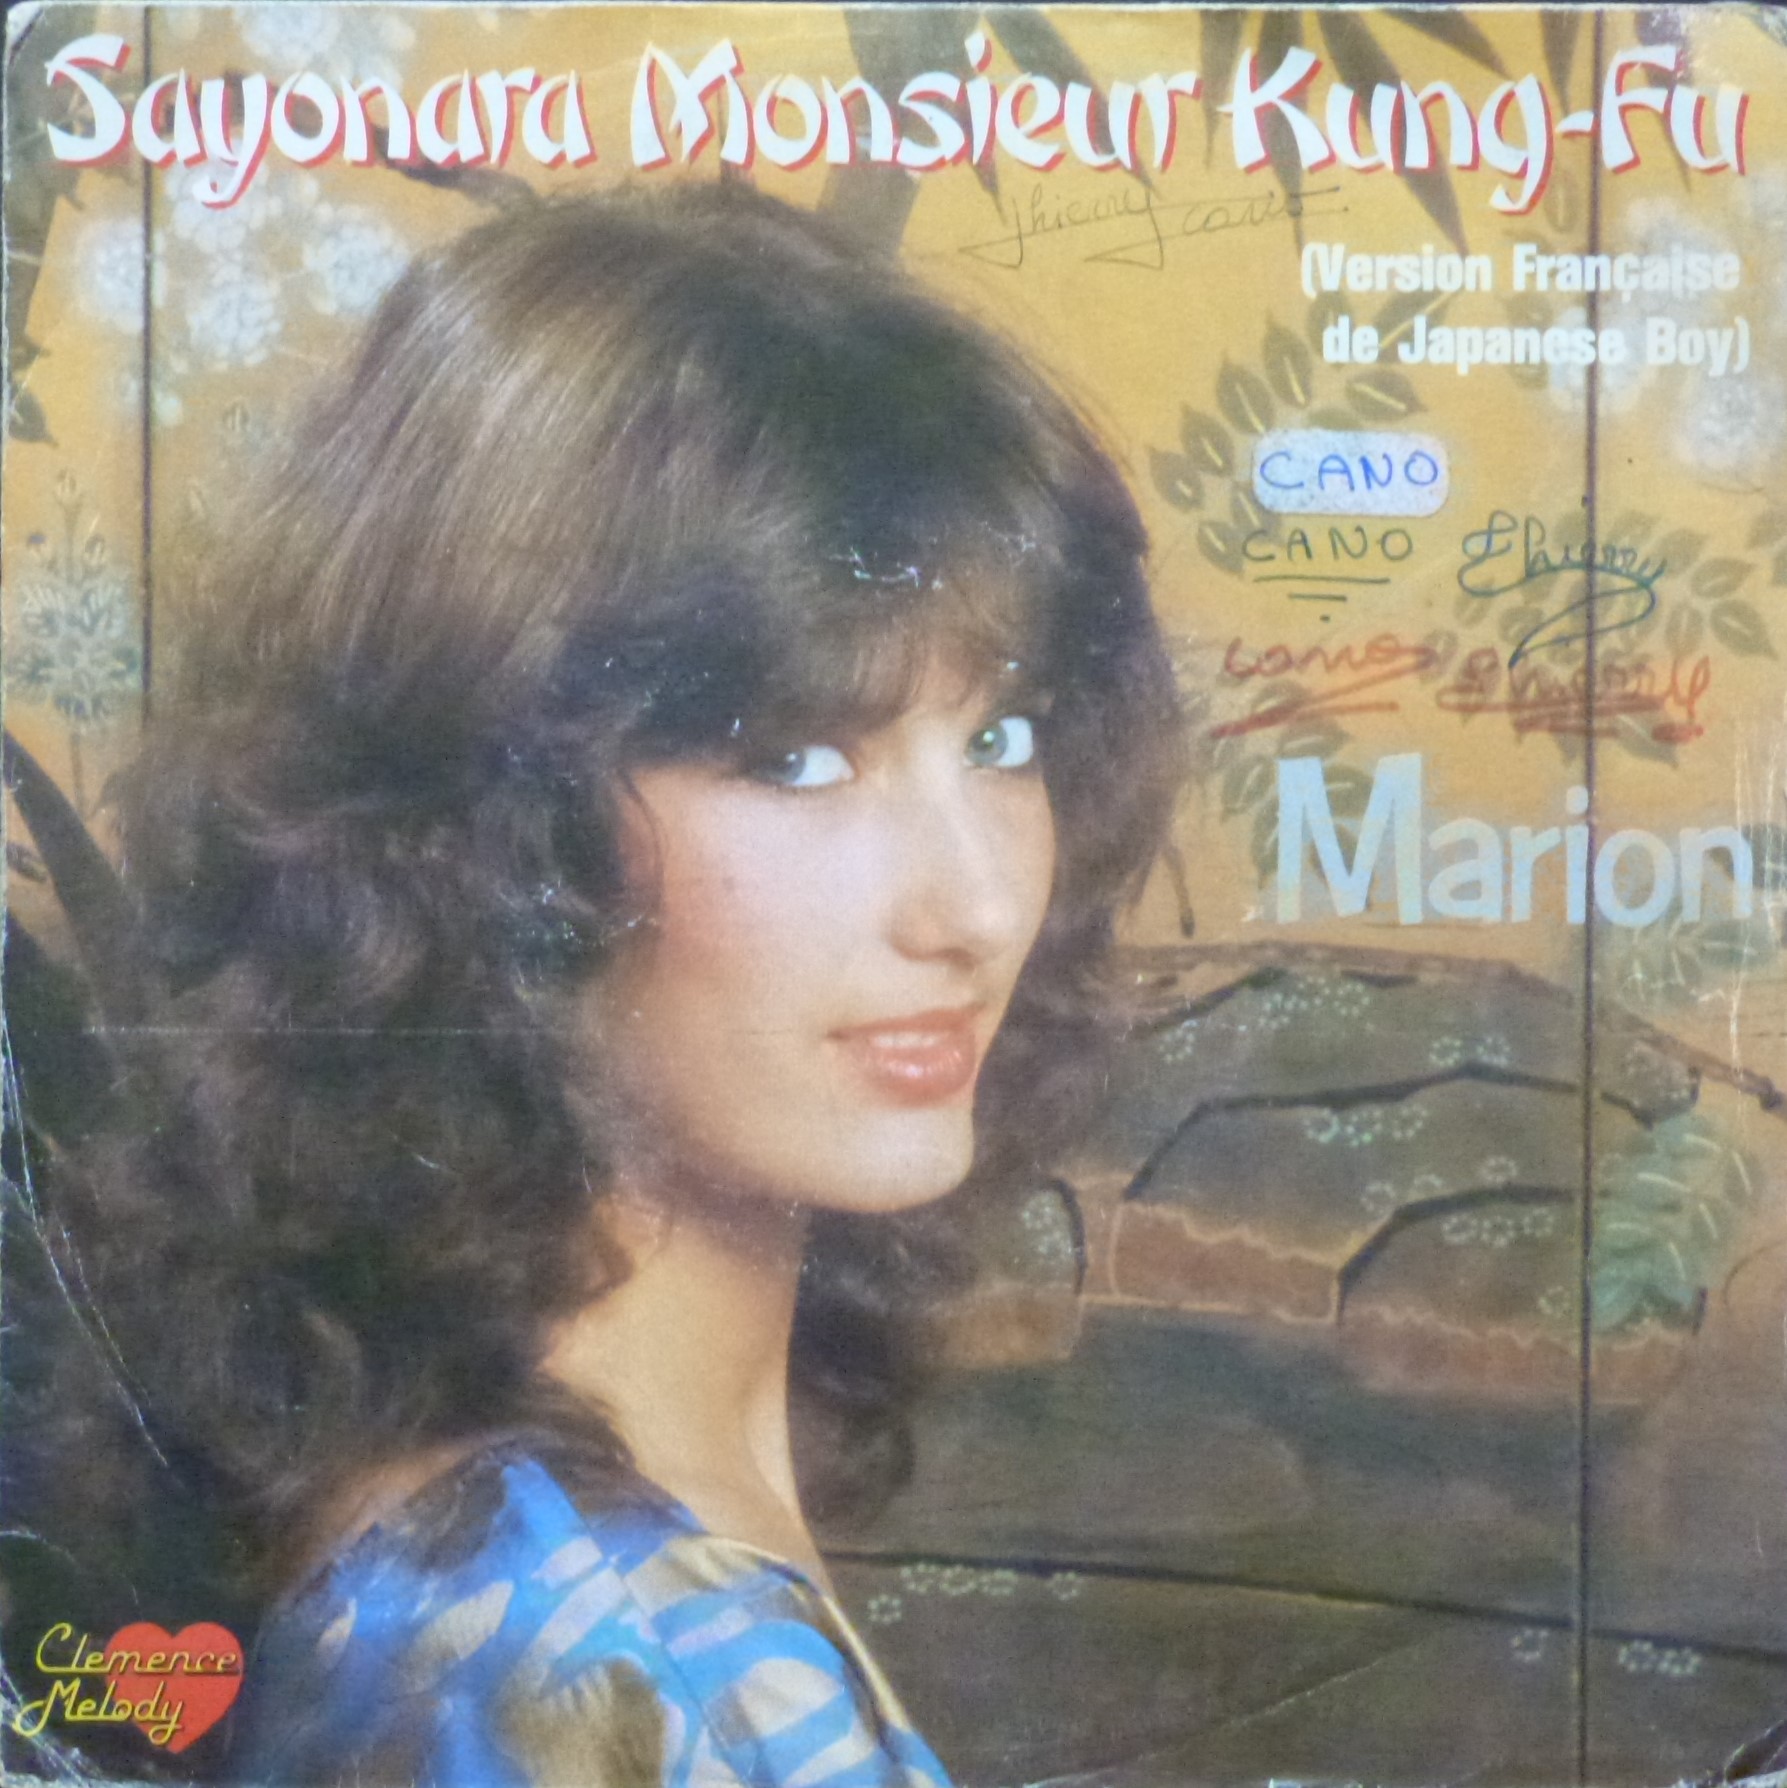 Marion, Sayonara Monsieur kung-fu